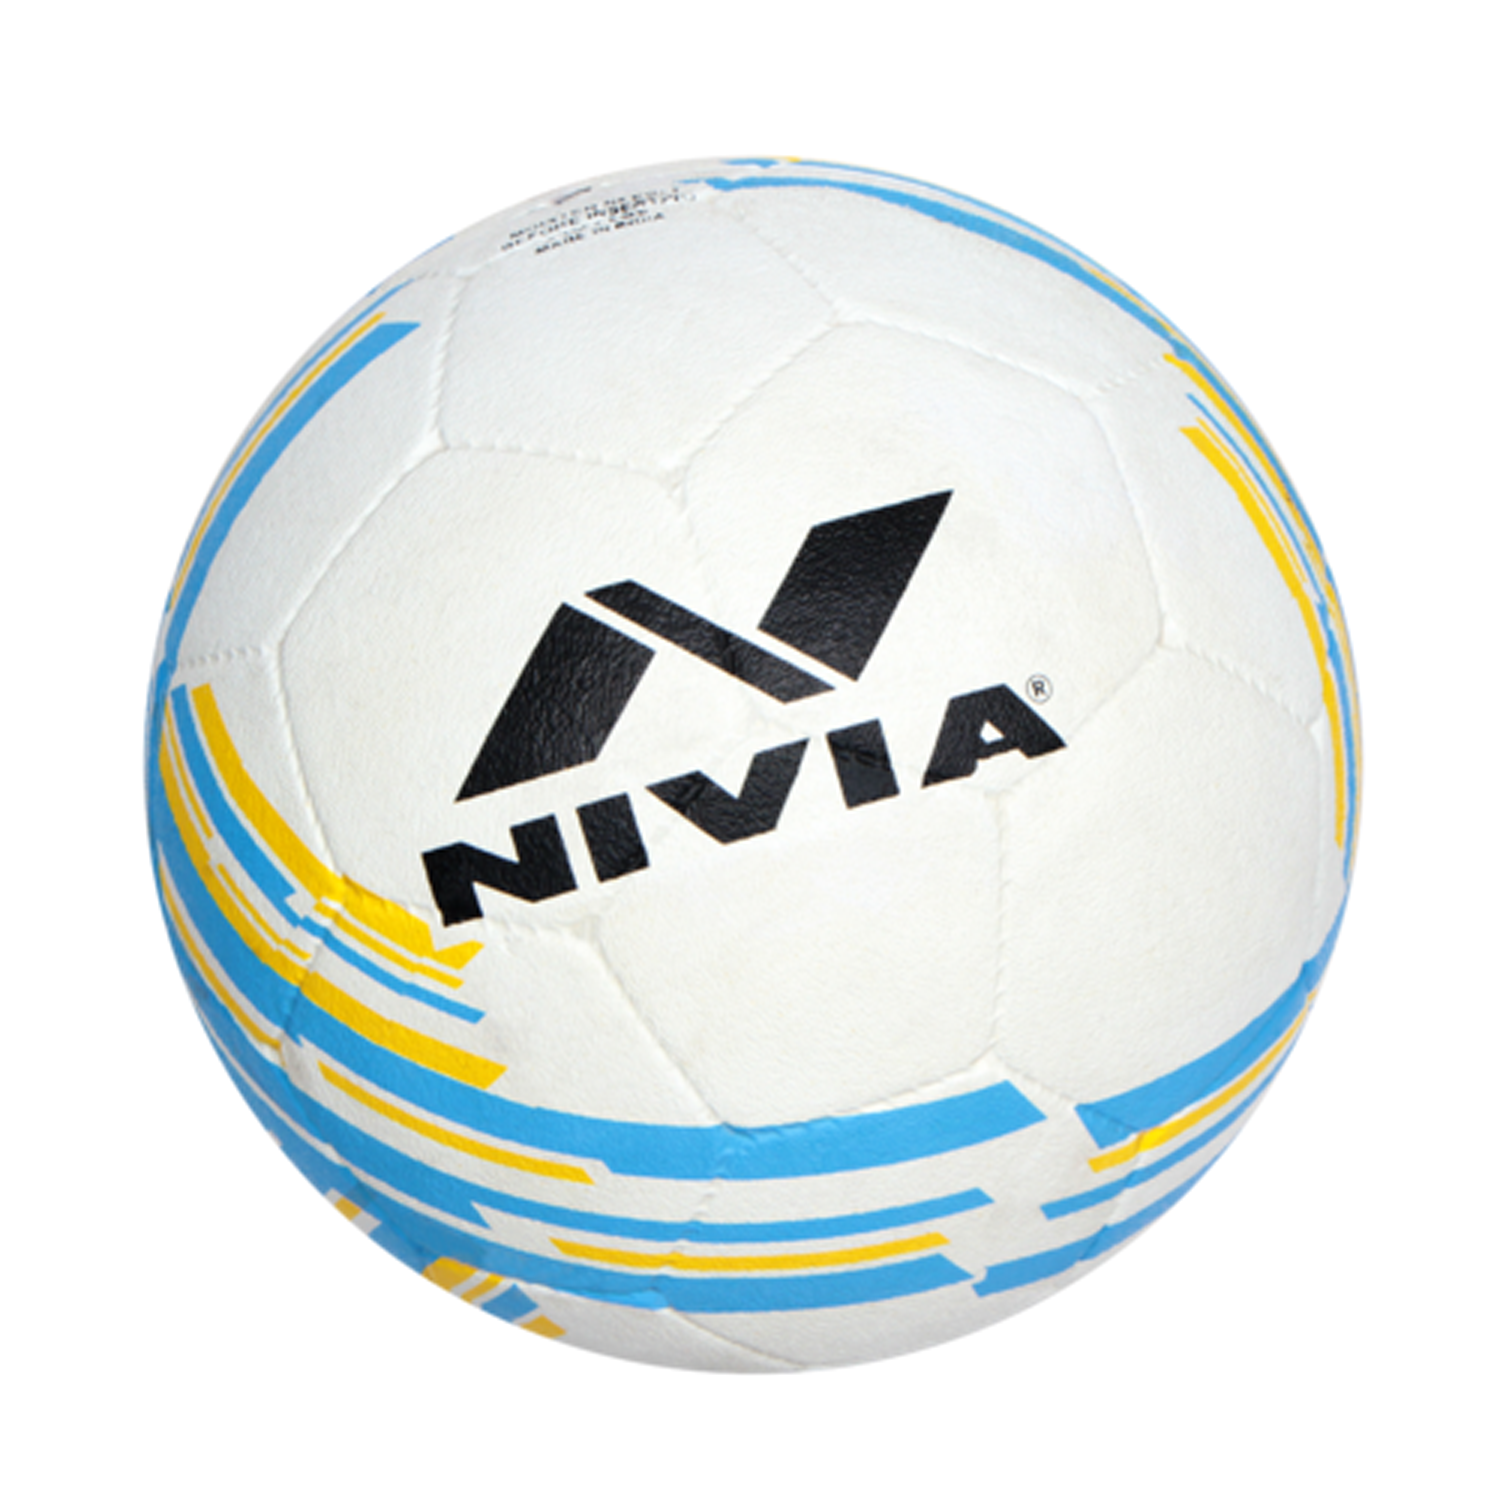 Nivia Argentina Country Colour Football, Multi Colour - Size 5 - Best Price online Prokicksports.com